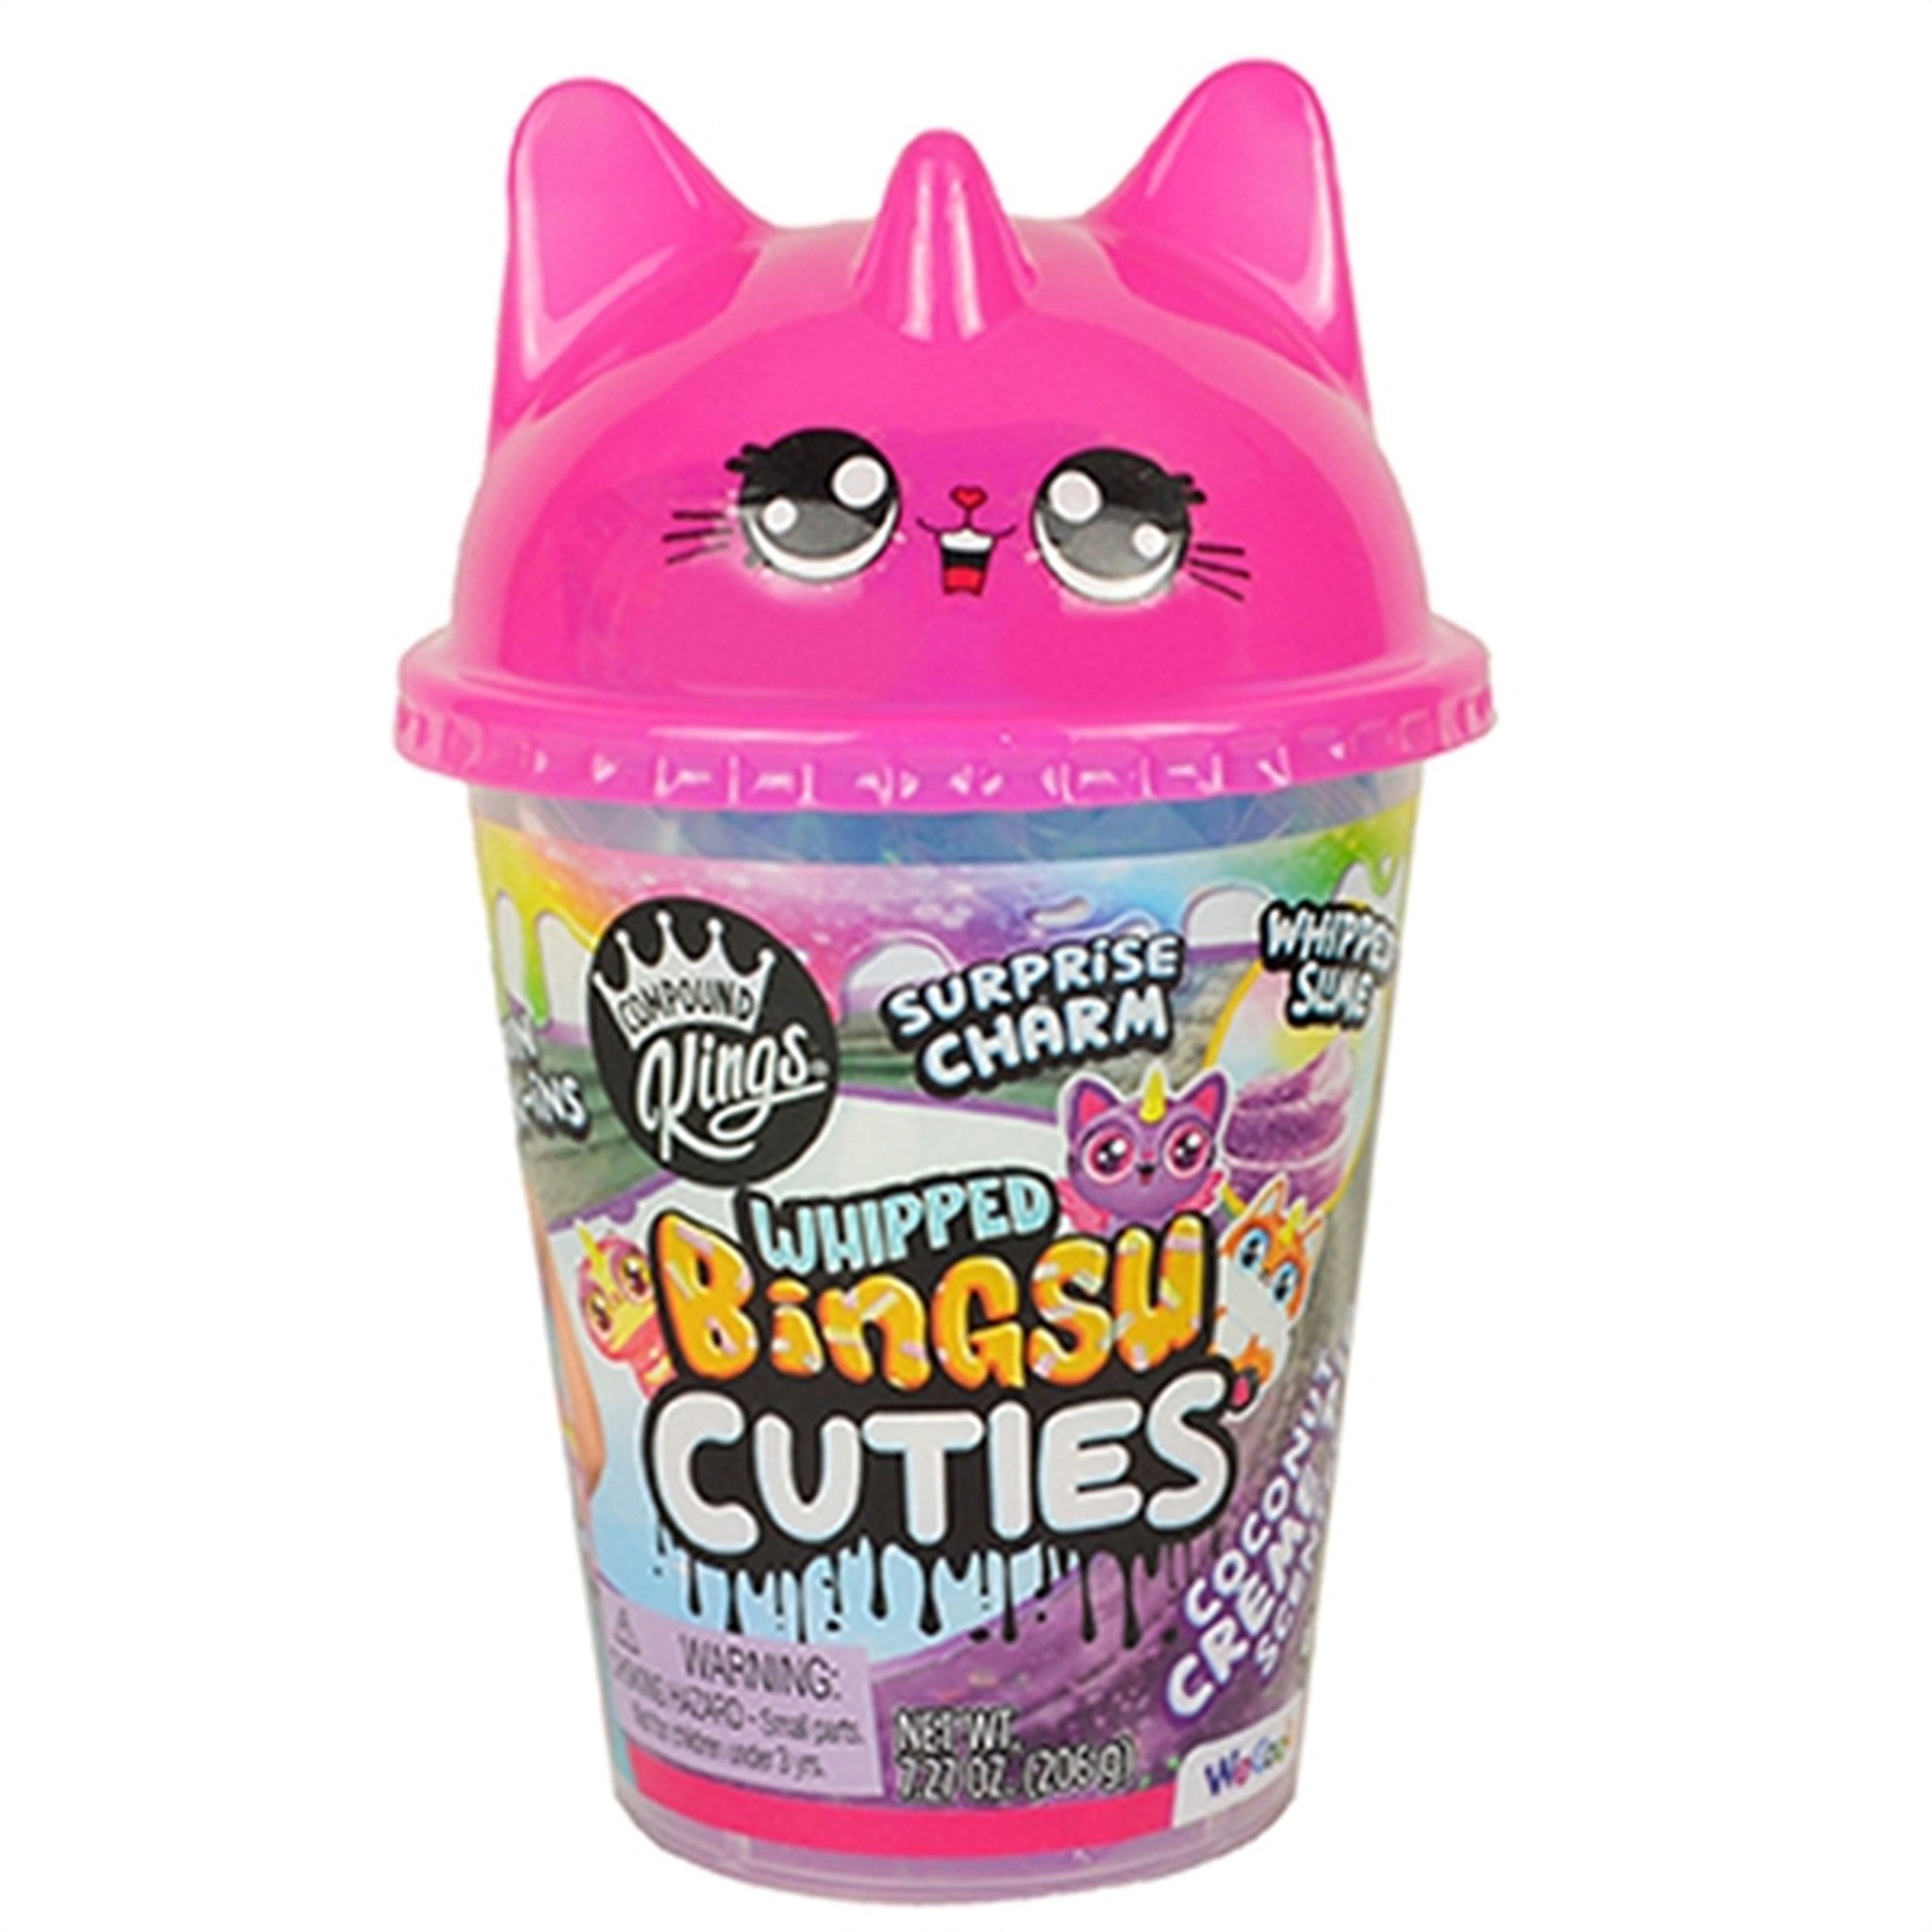 Compound Kings Slim Bingsu Cuties Coconut Cream 3